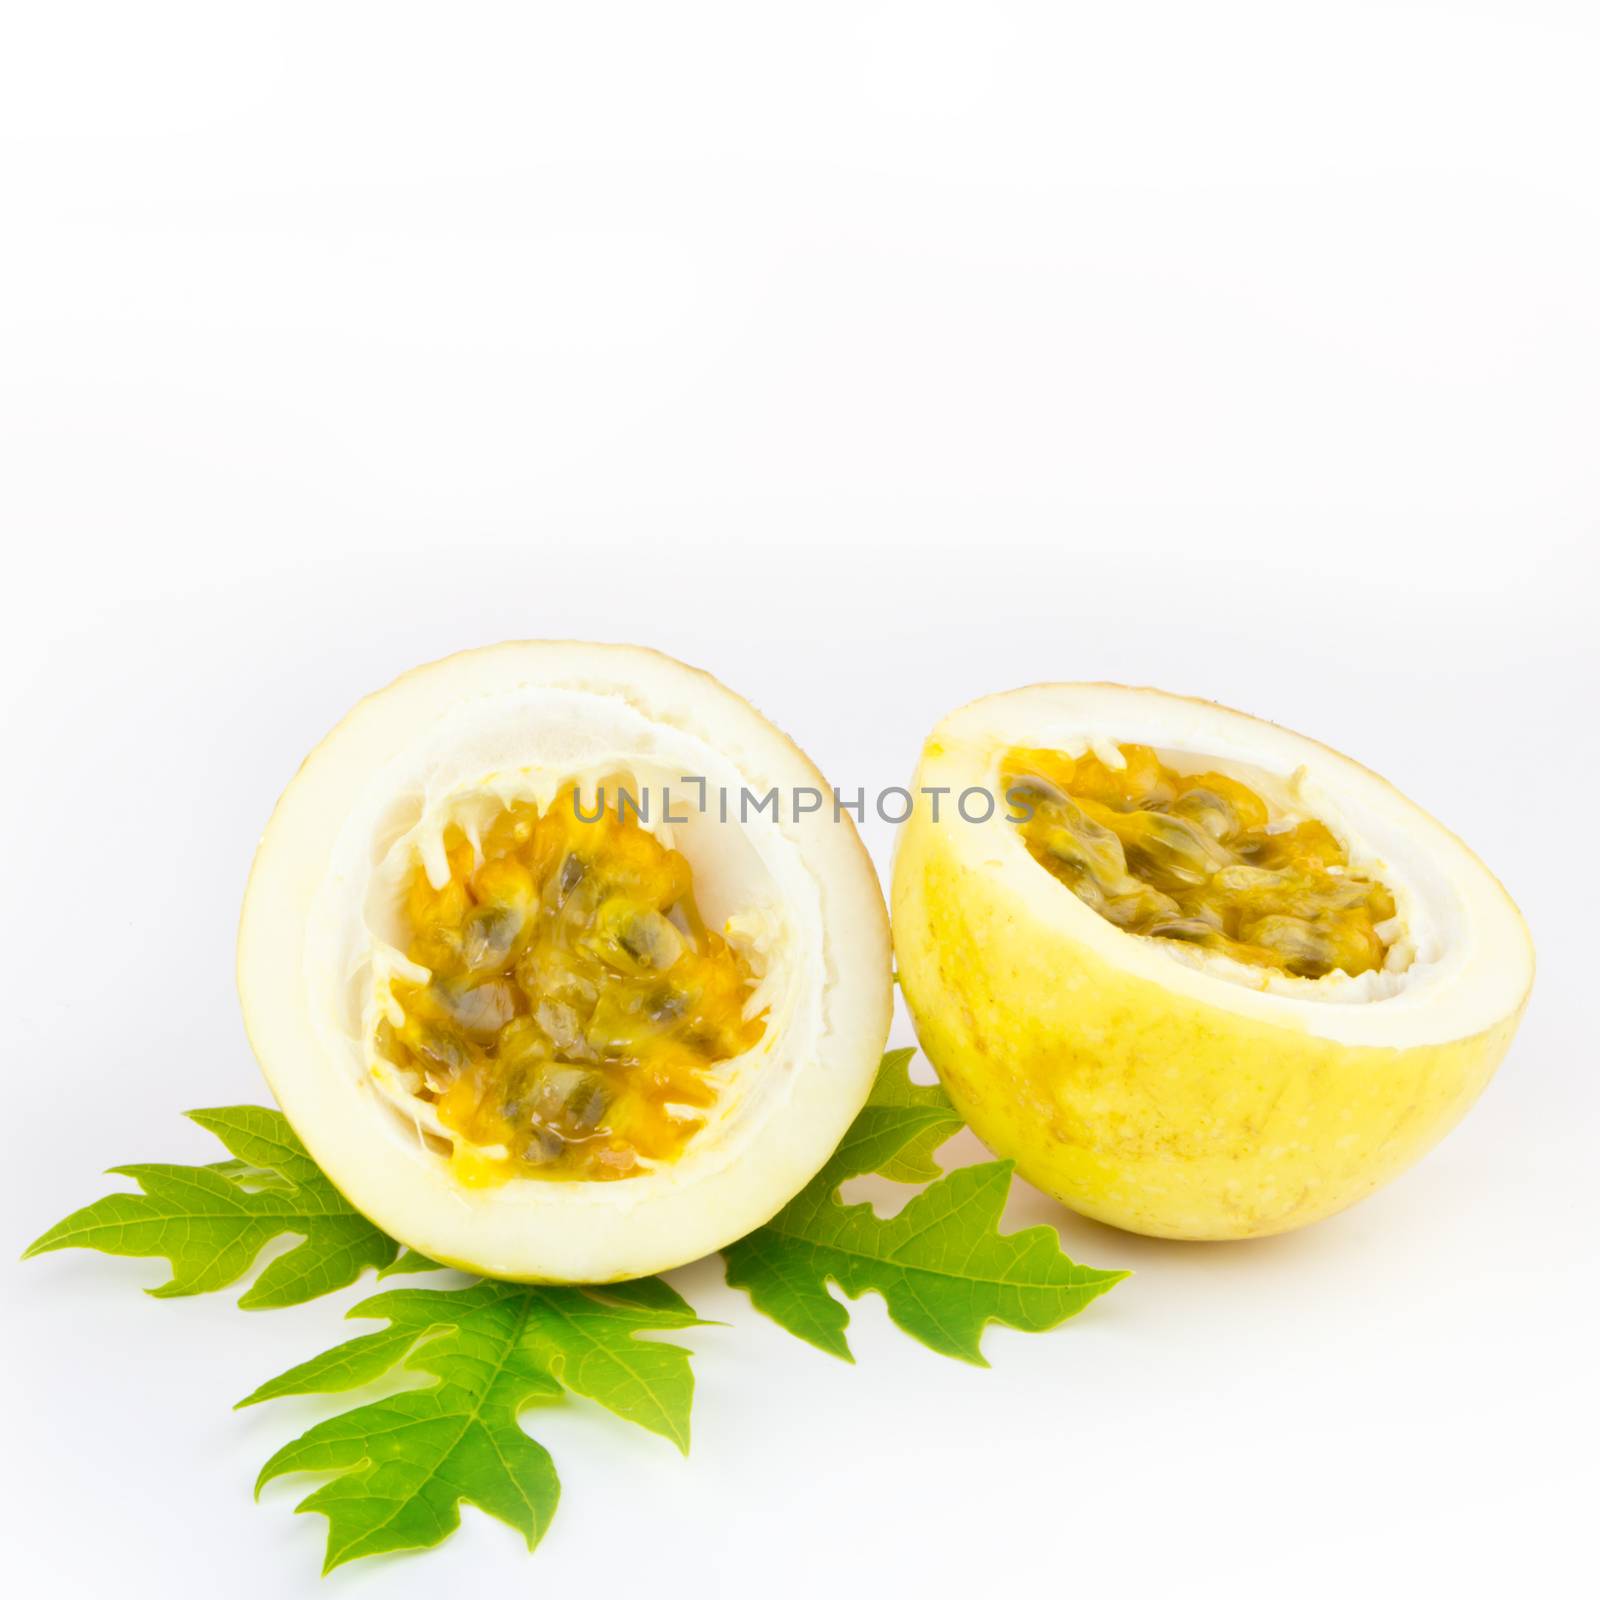 Passion fruit or maracuya by wyoosumran